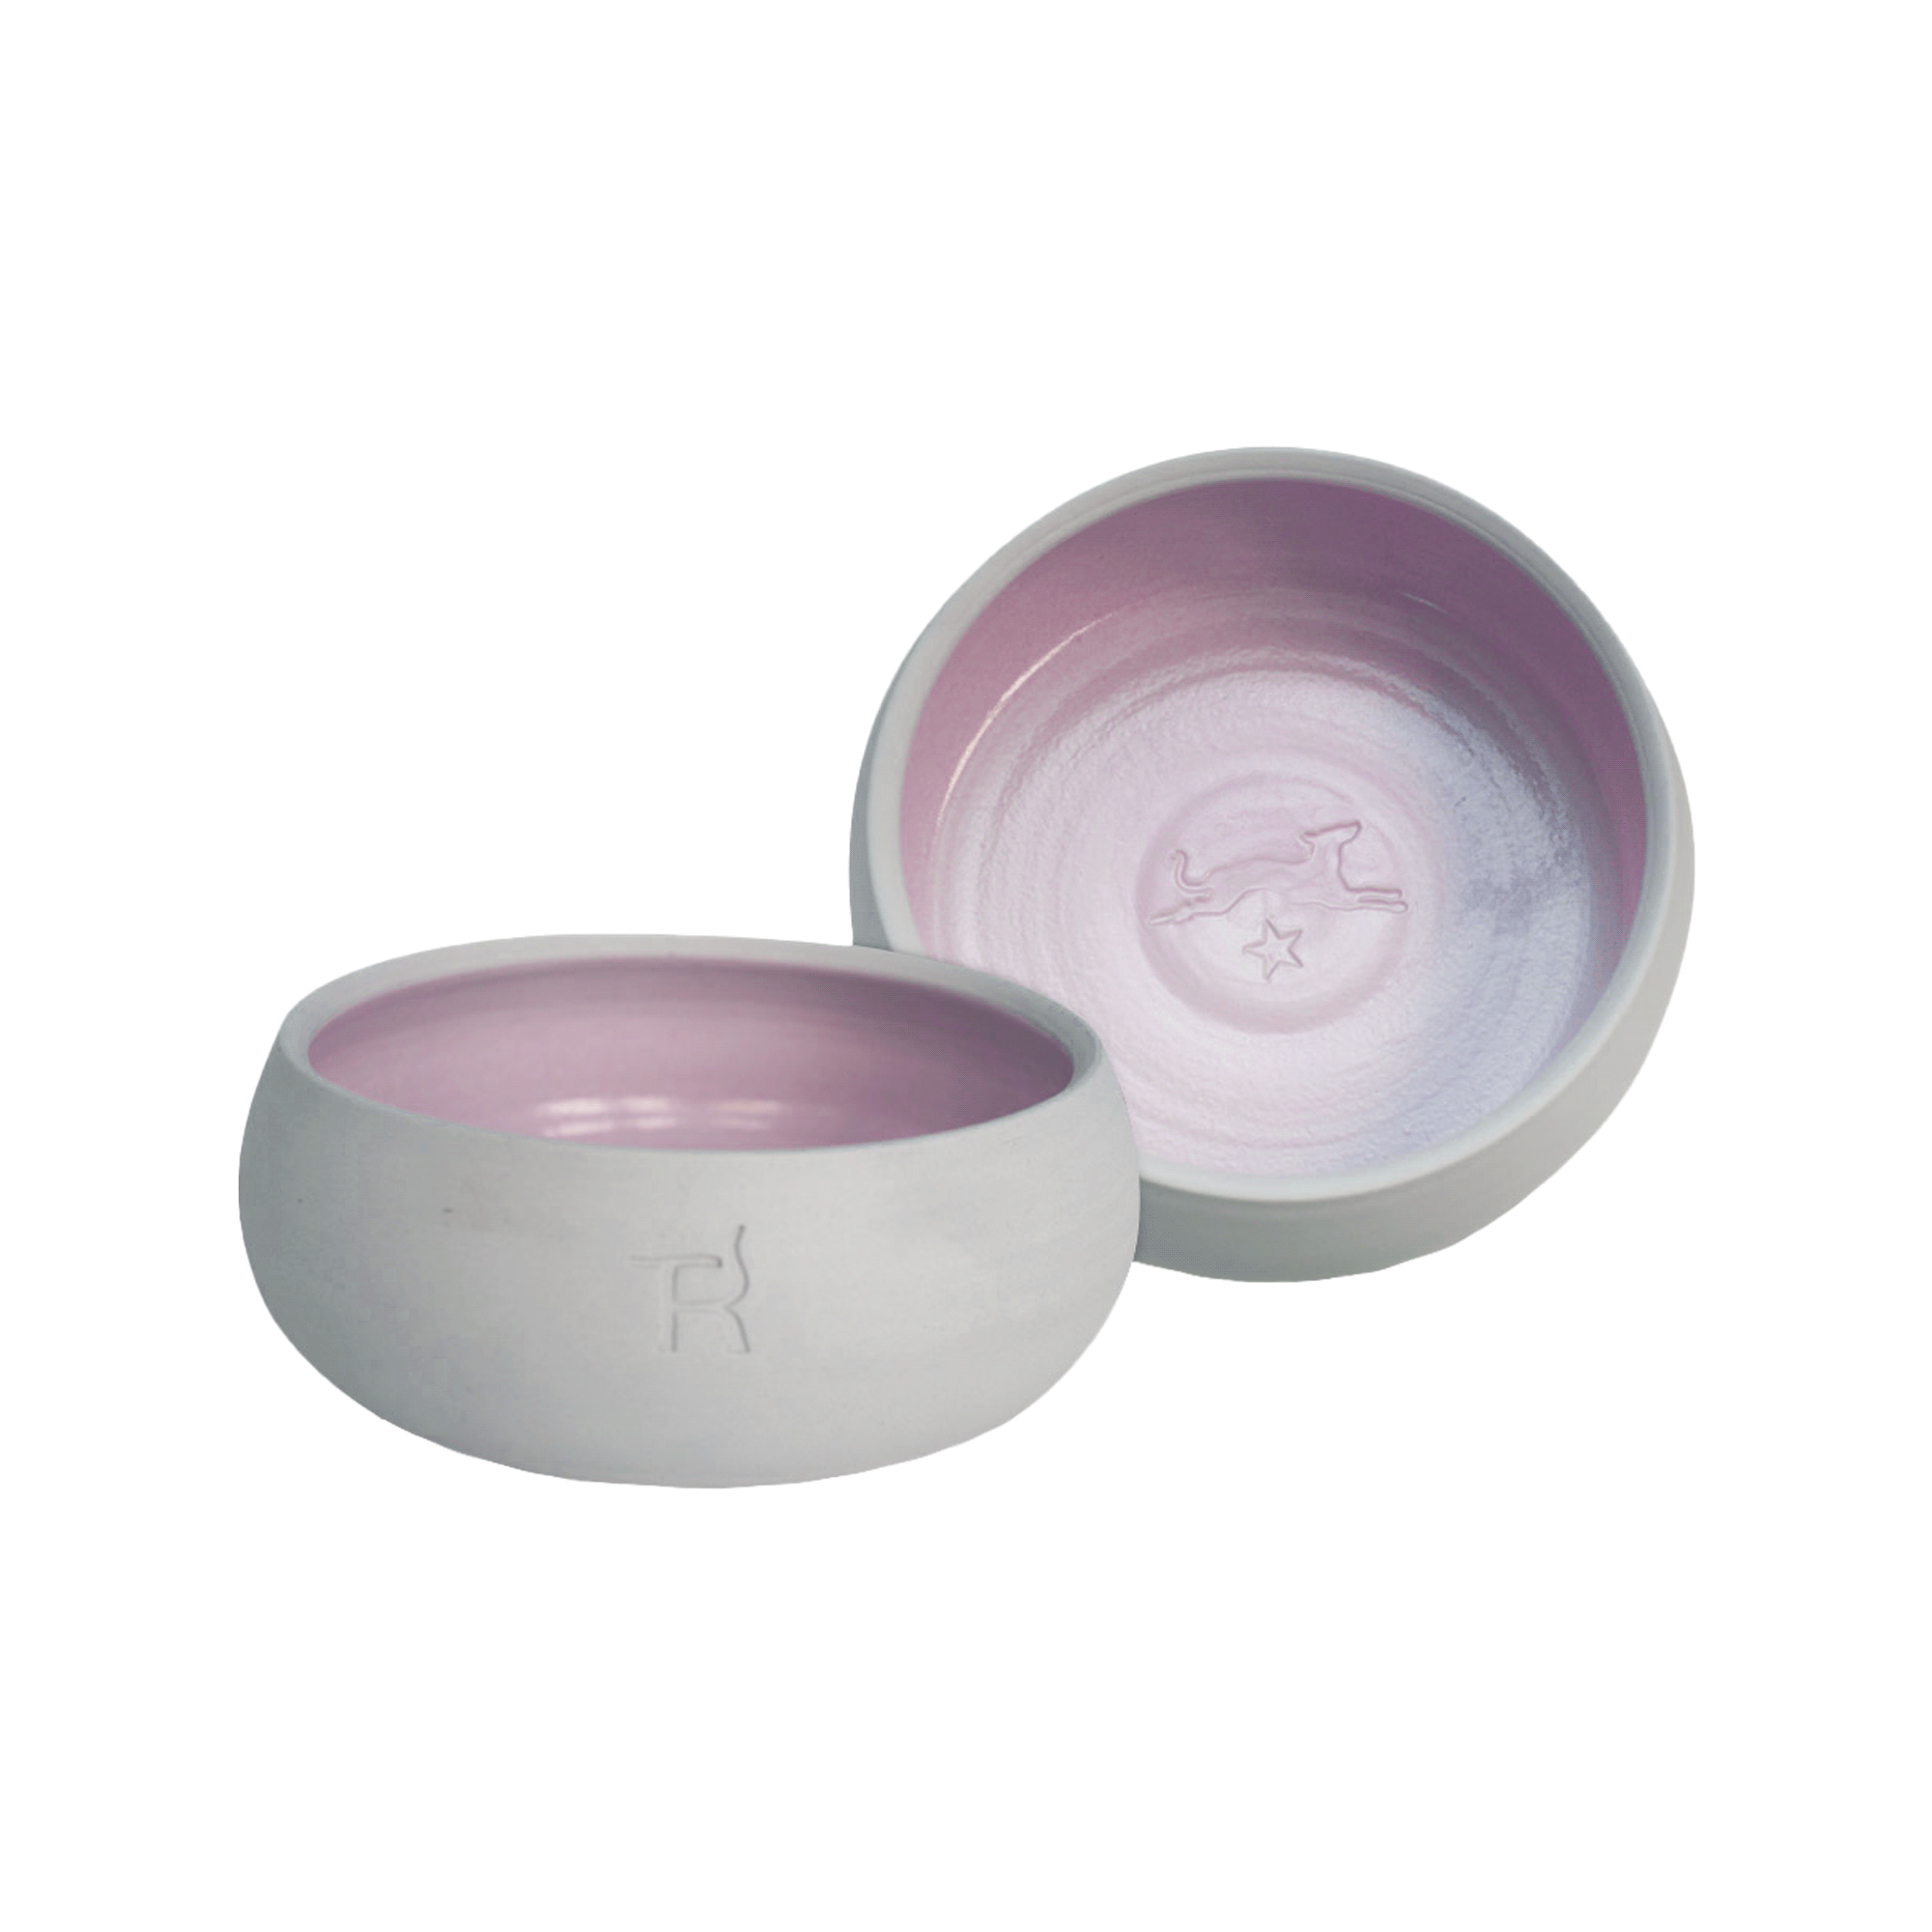 Ceramic dog bowl – natural colour / pastel lilac